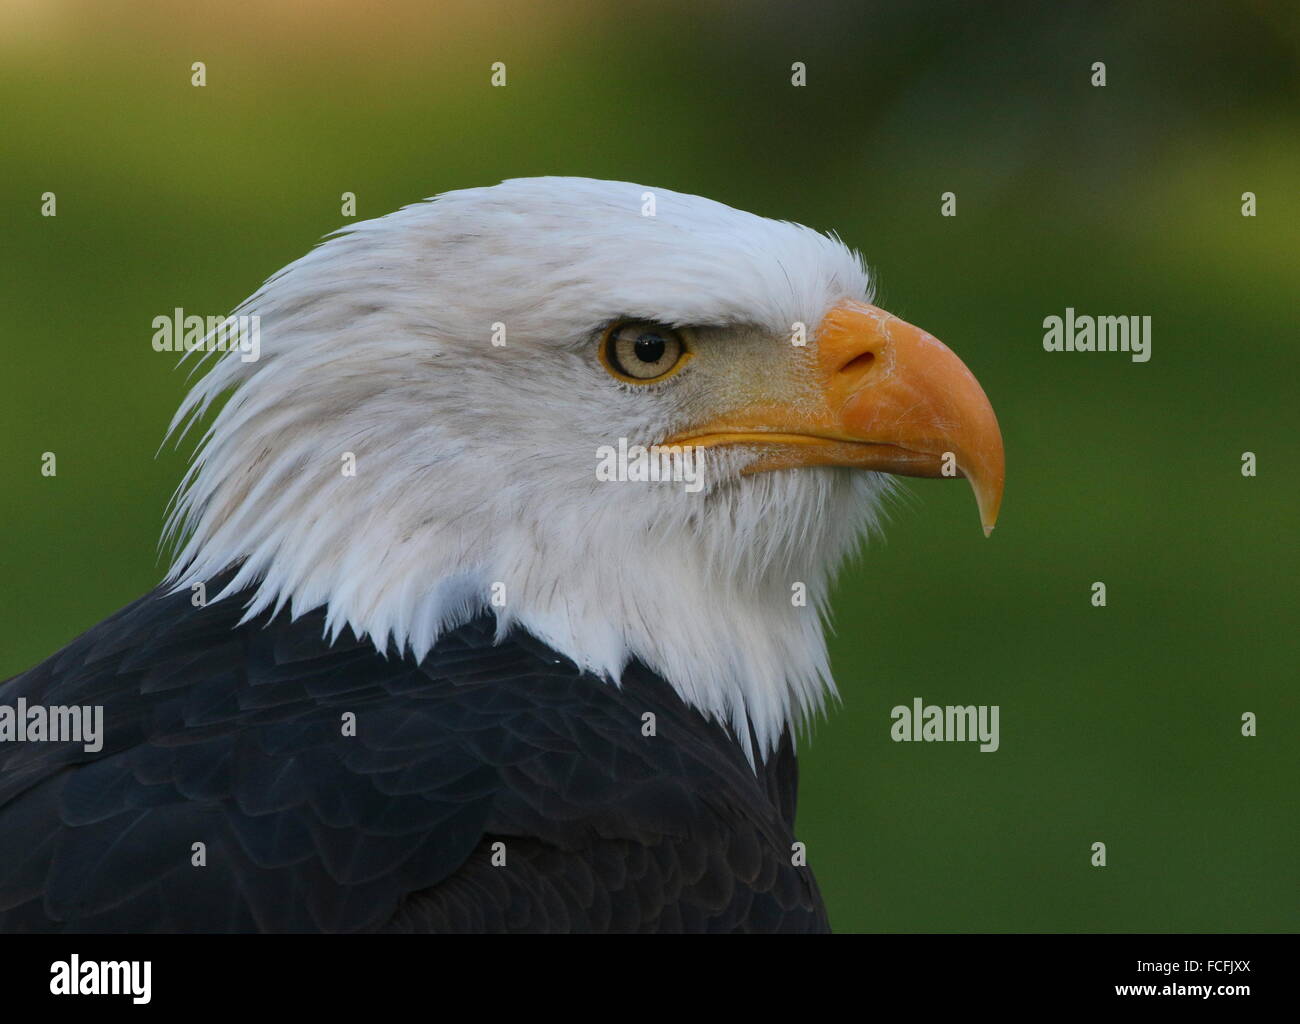 Mature North American Bald eagle (Haliaeetus leucocephalus), close-up of the head, seen in profile Stock Photo